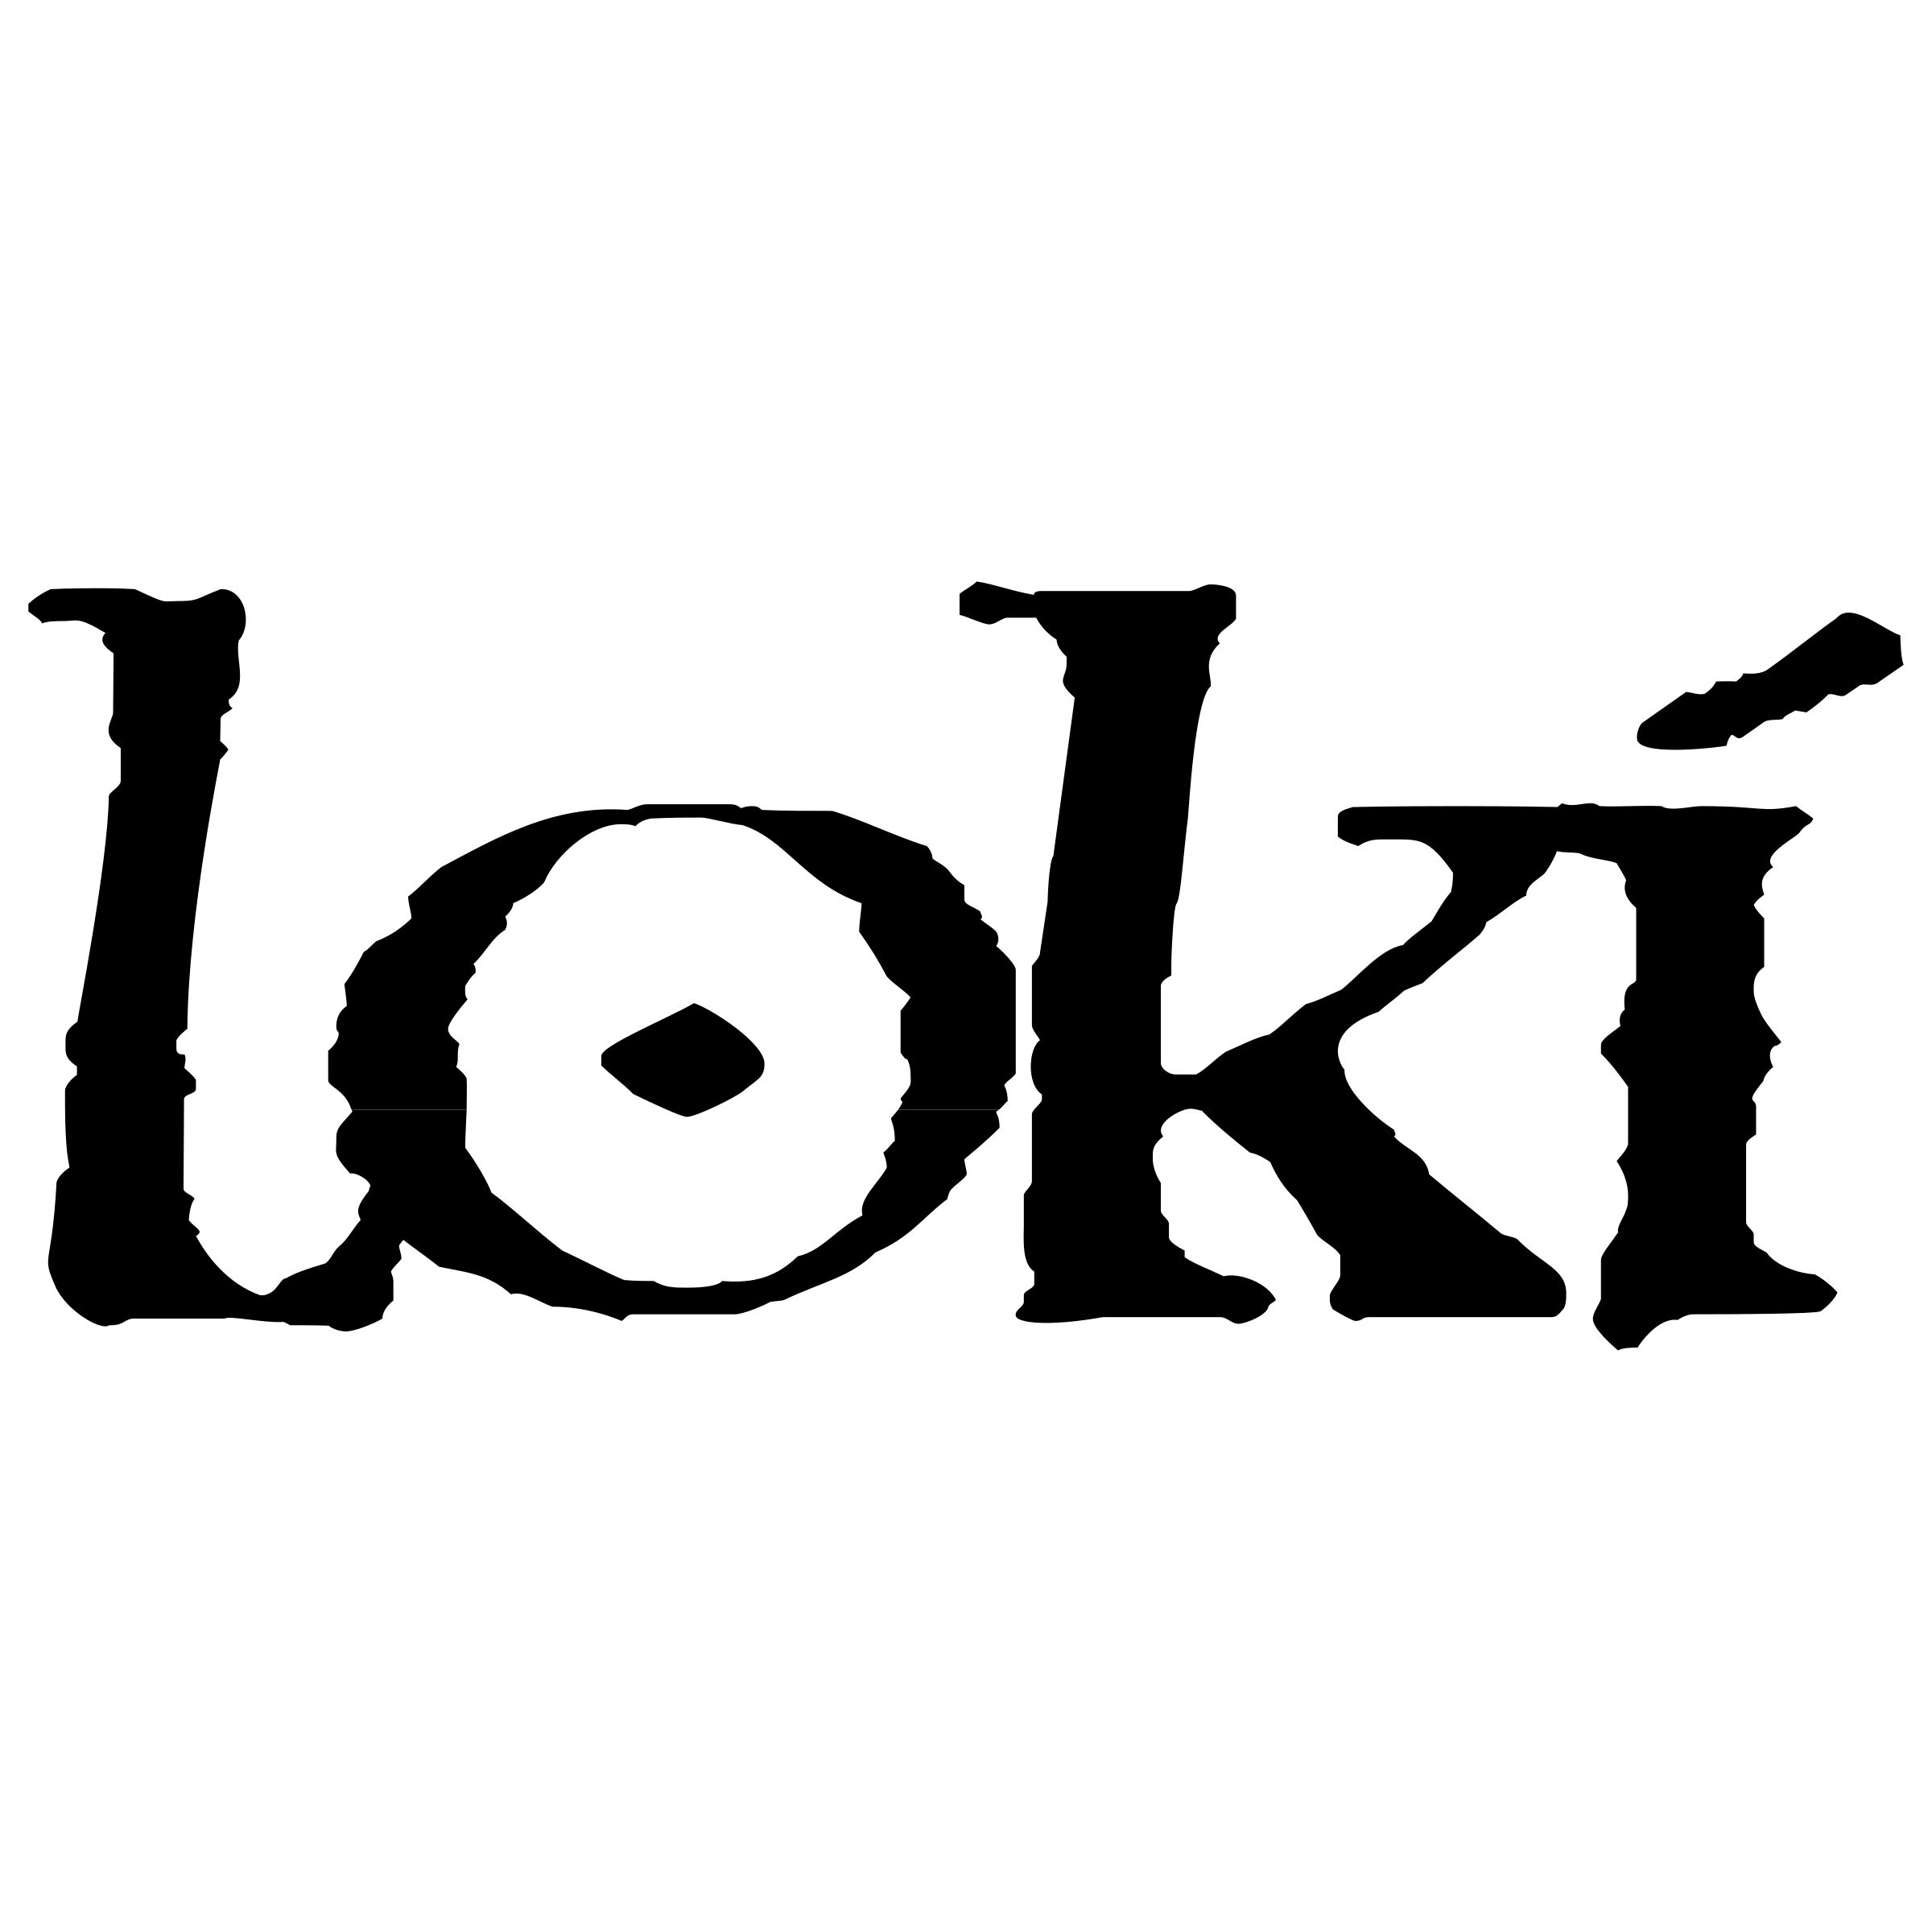 Loki Logo - Loki Logo PNG Transparent & SVG Vector - Freebie Supply